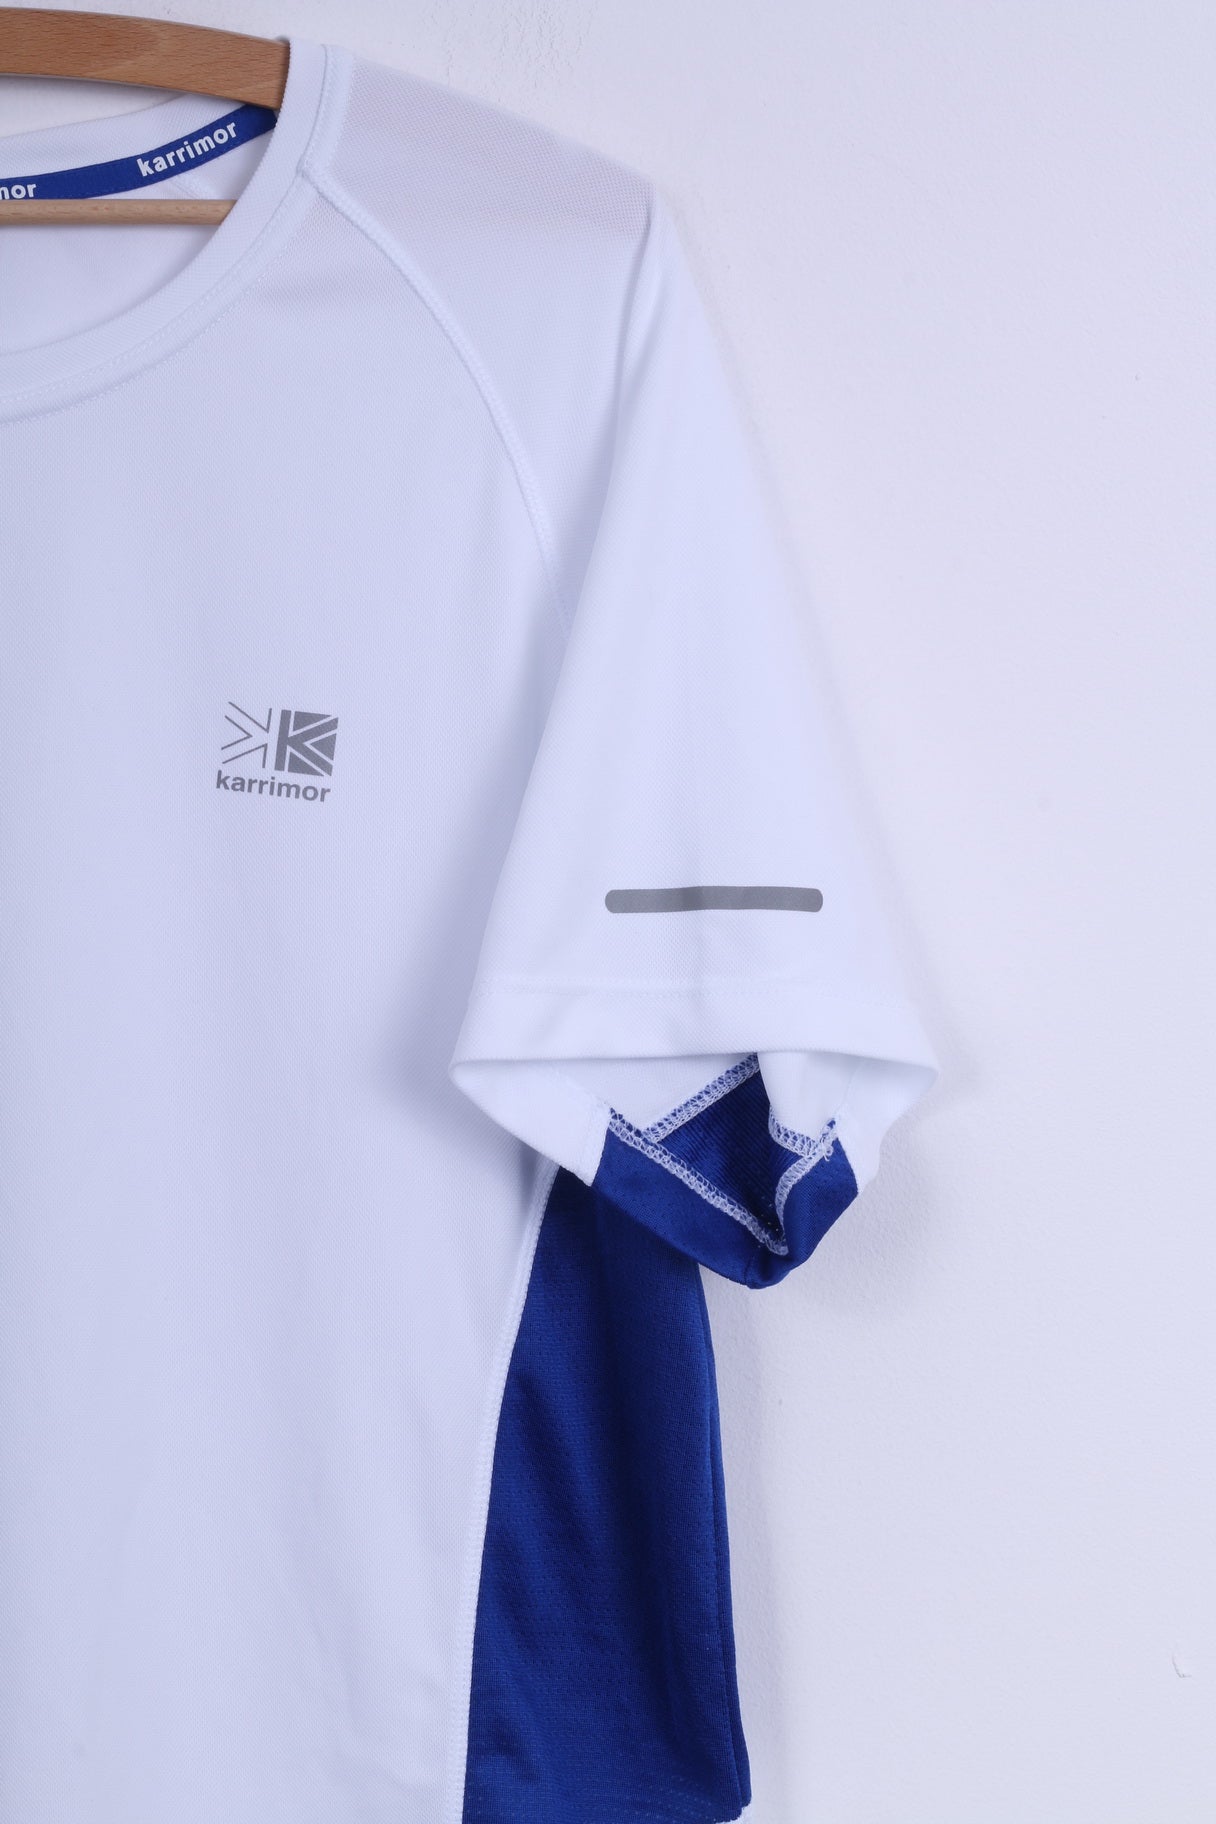 T-shirt Karrimor da uomo XXL da corsa bianca sportiva traspirante